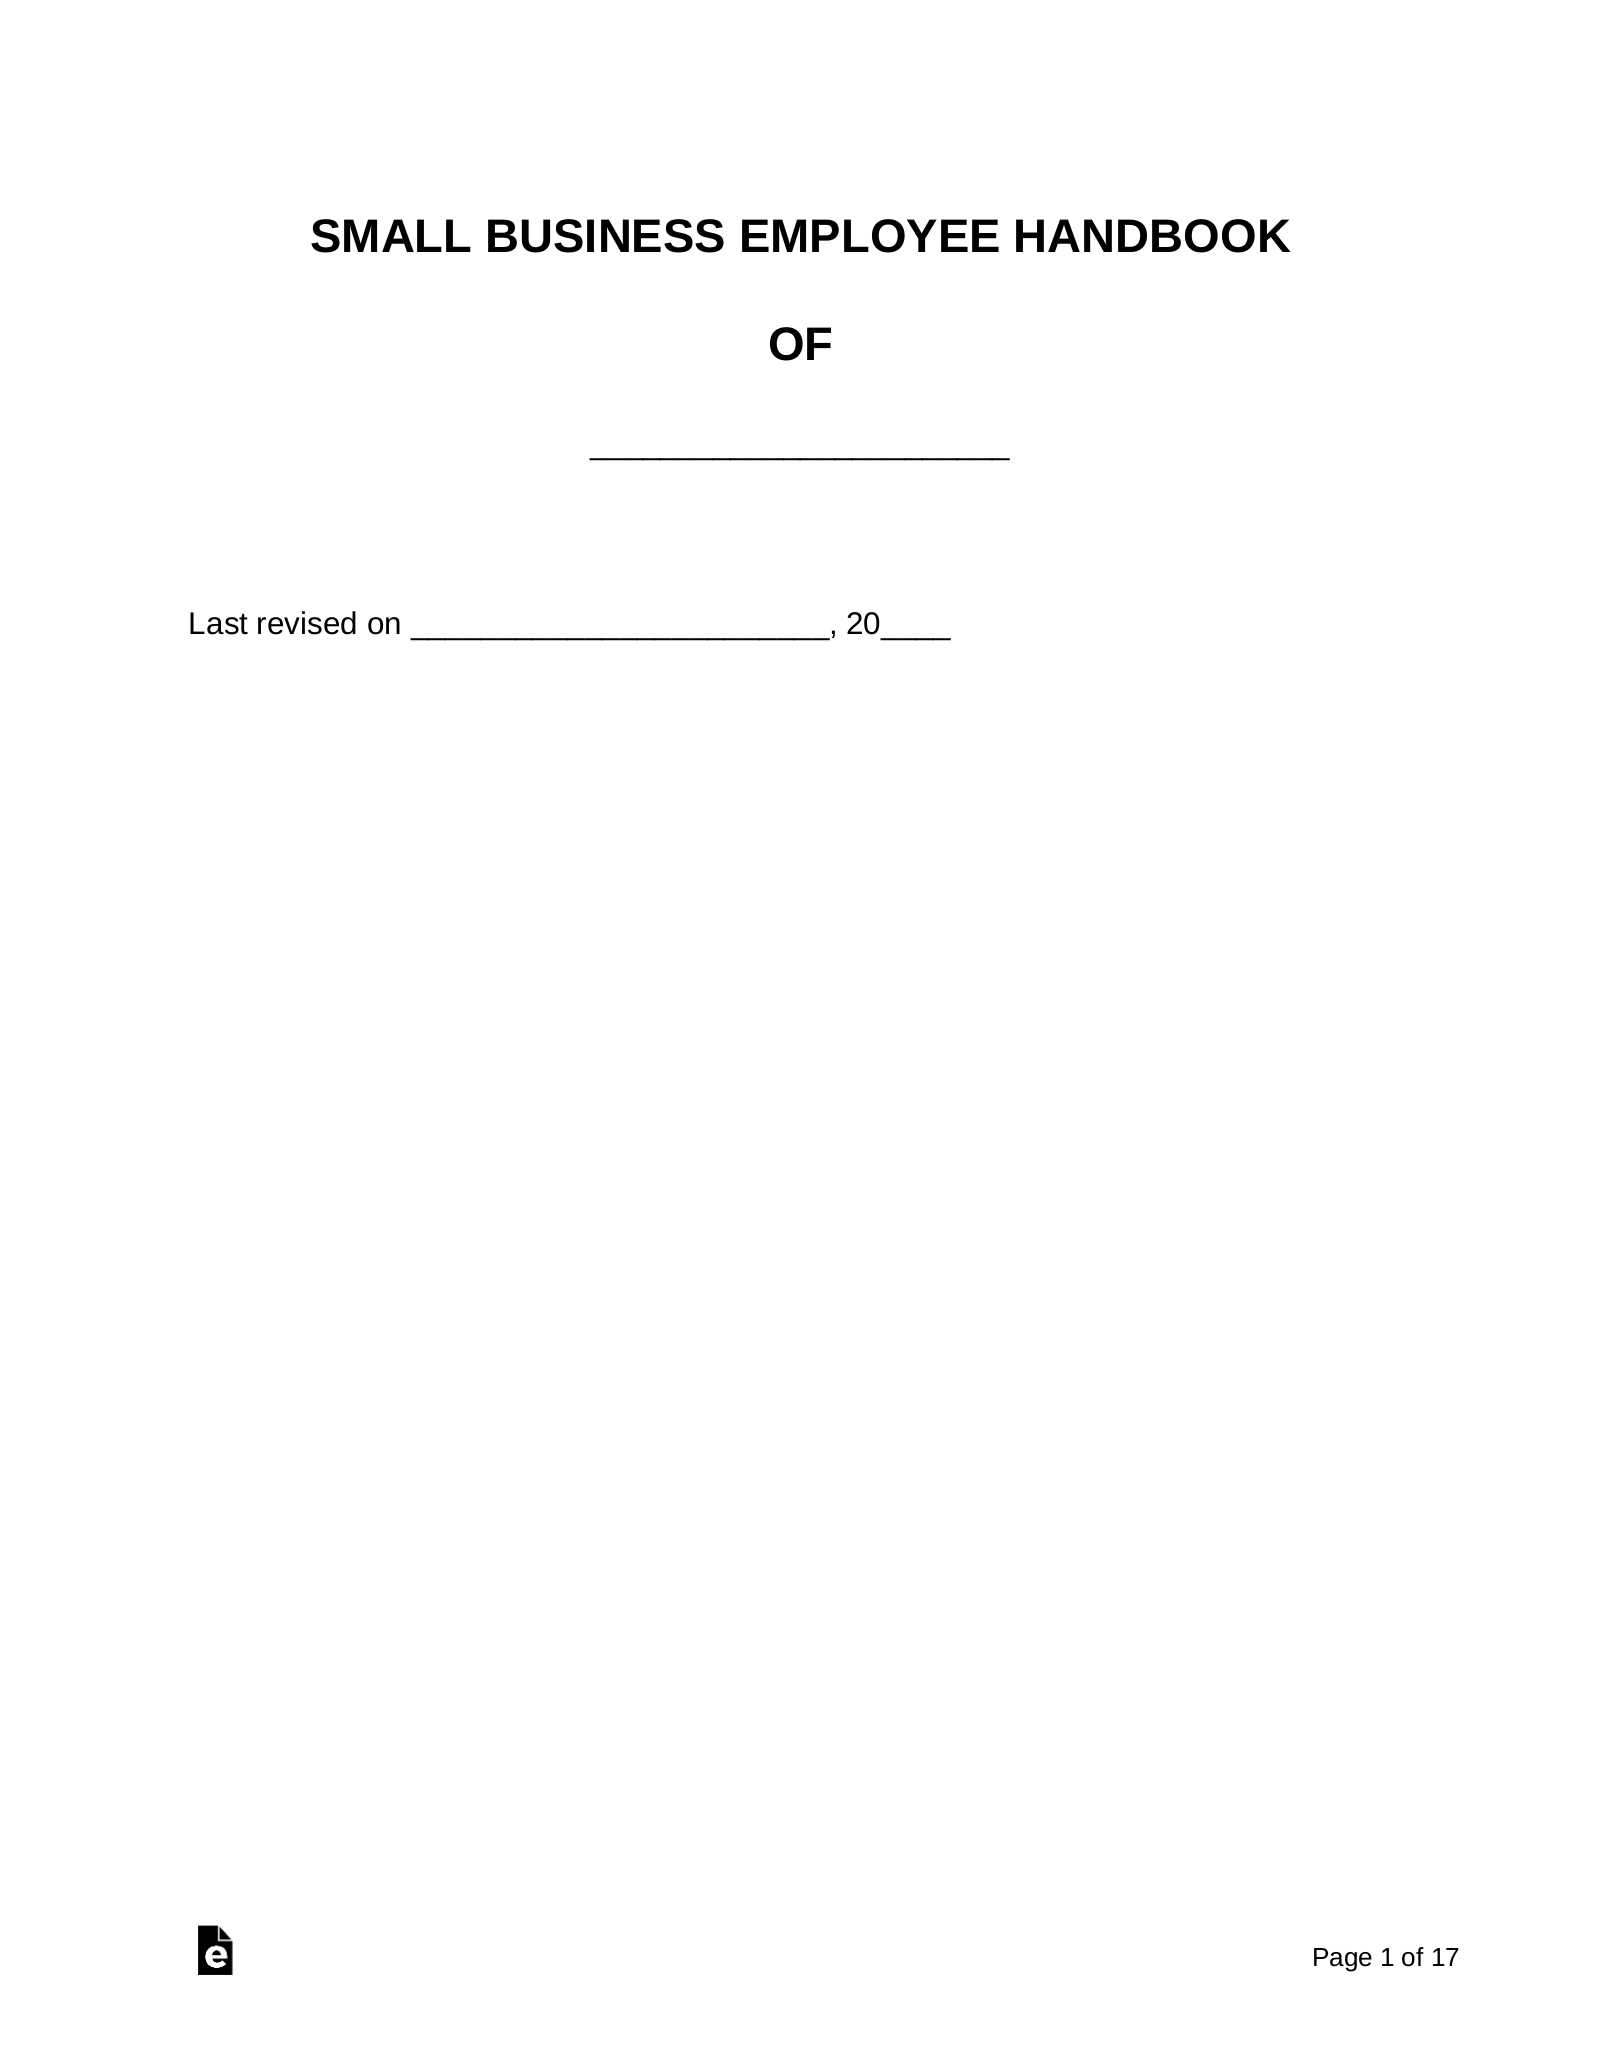 Small Business Employee Handbook